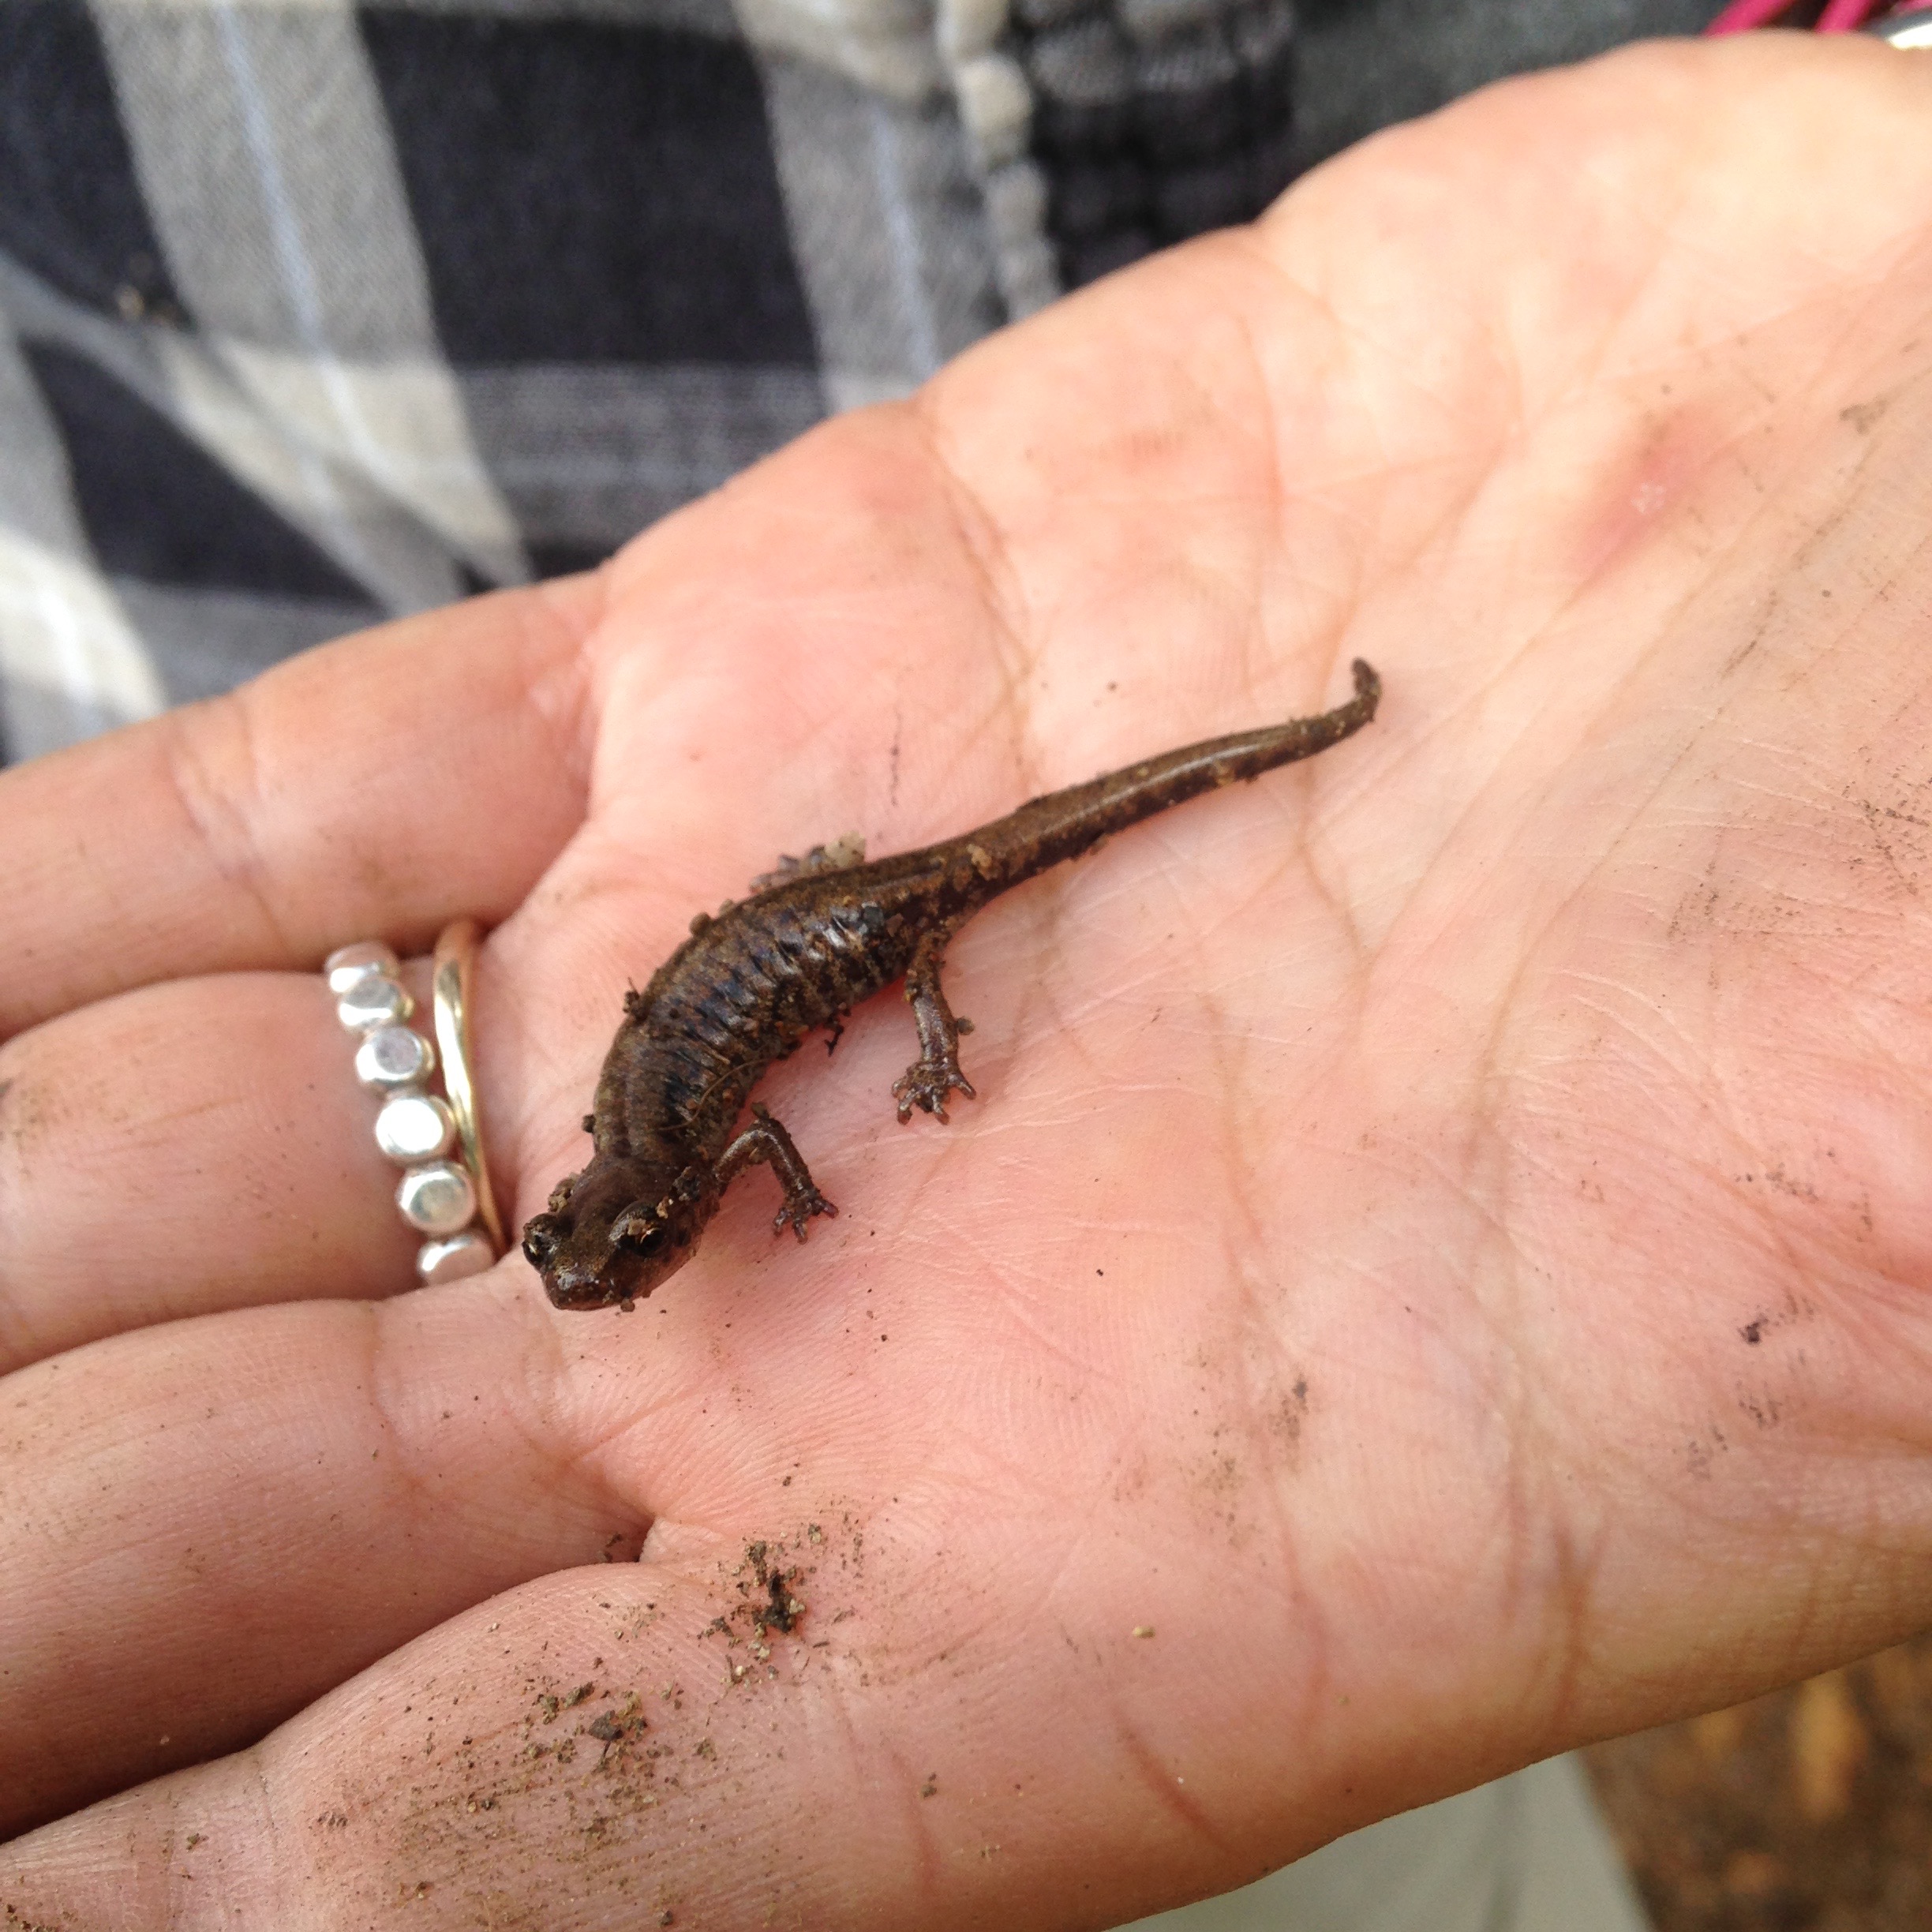 Sacramento Mountain salamander in hand